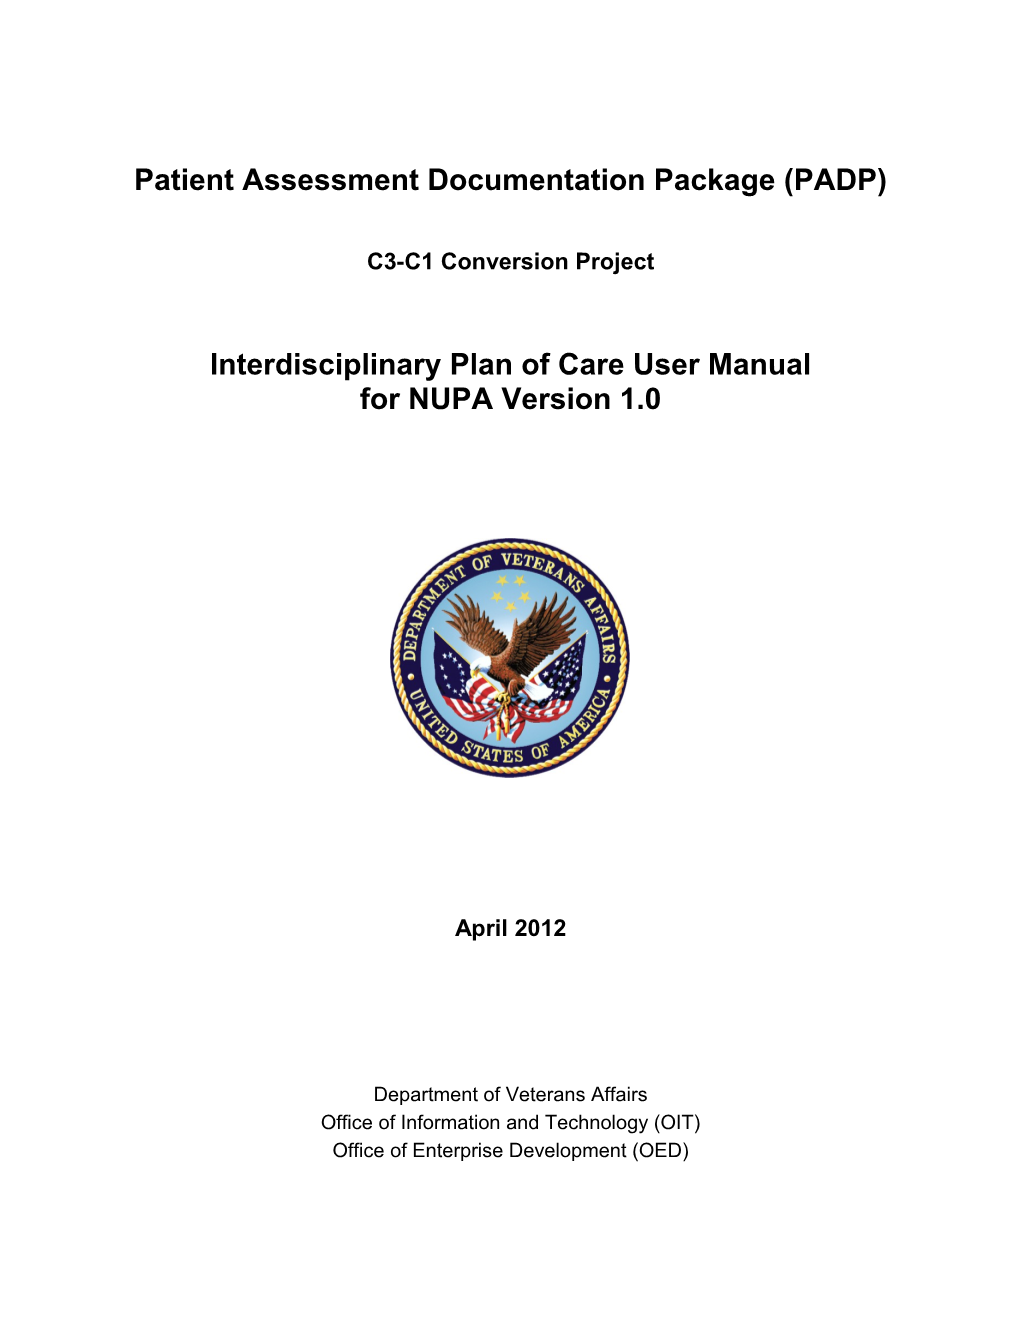 PADP Interdisciplinary Plan of Care User Manual